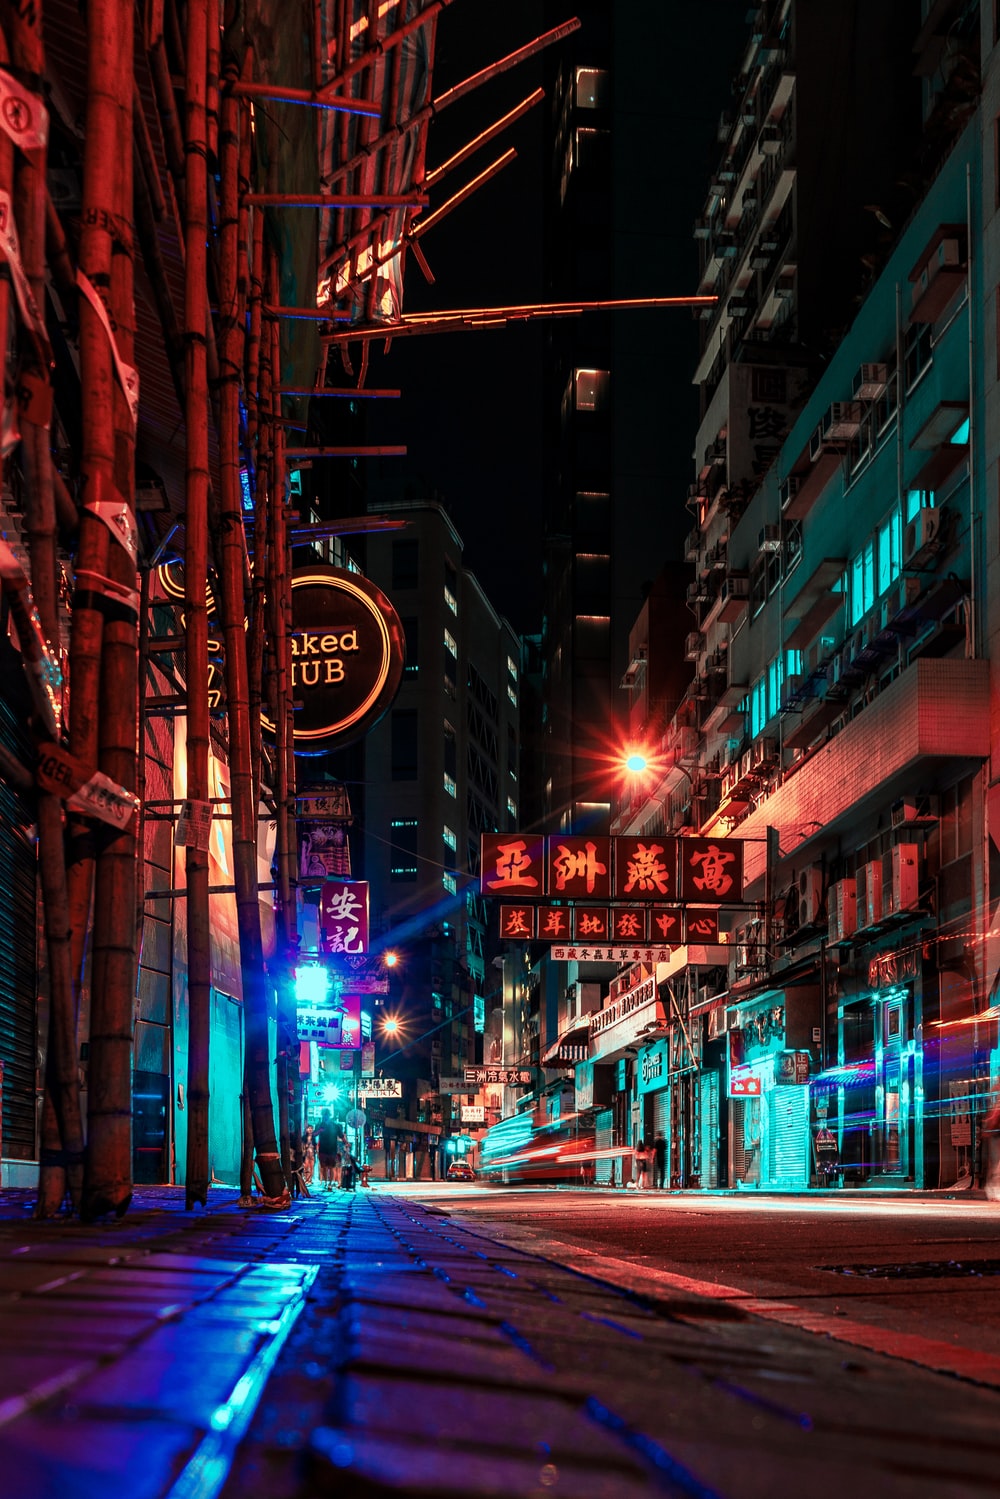 Hong Kong At Night Picture. Download Free Image